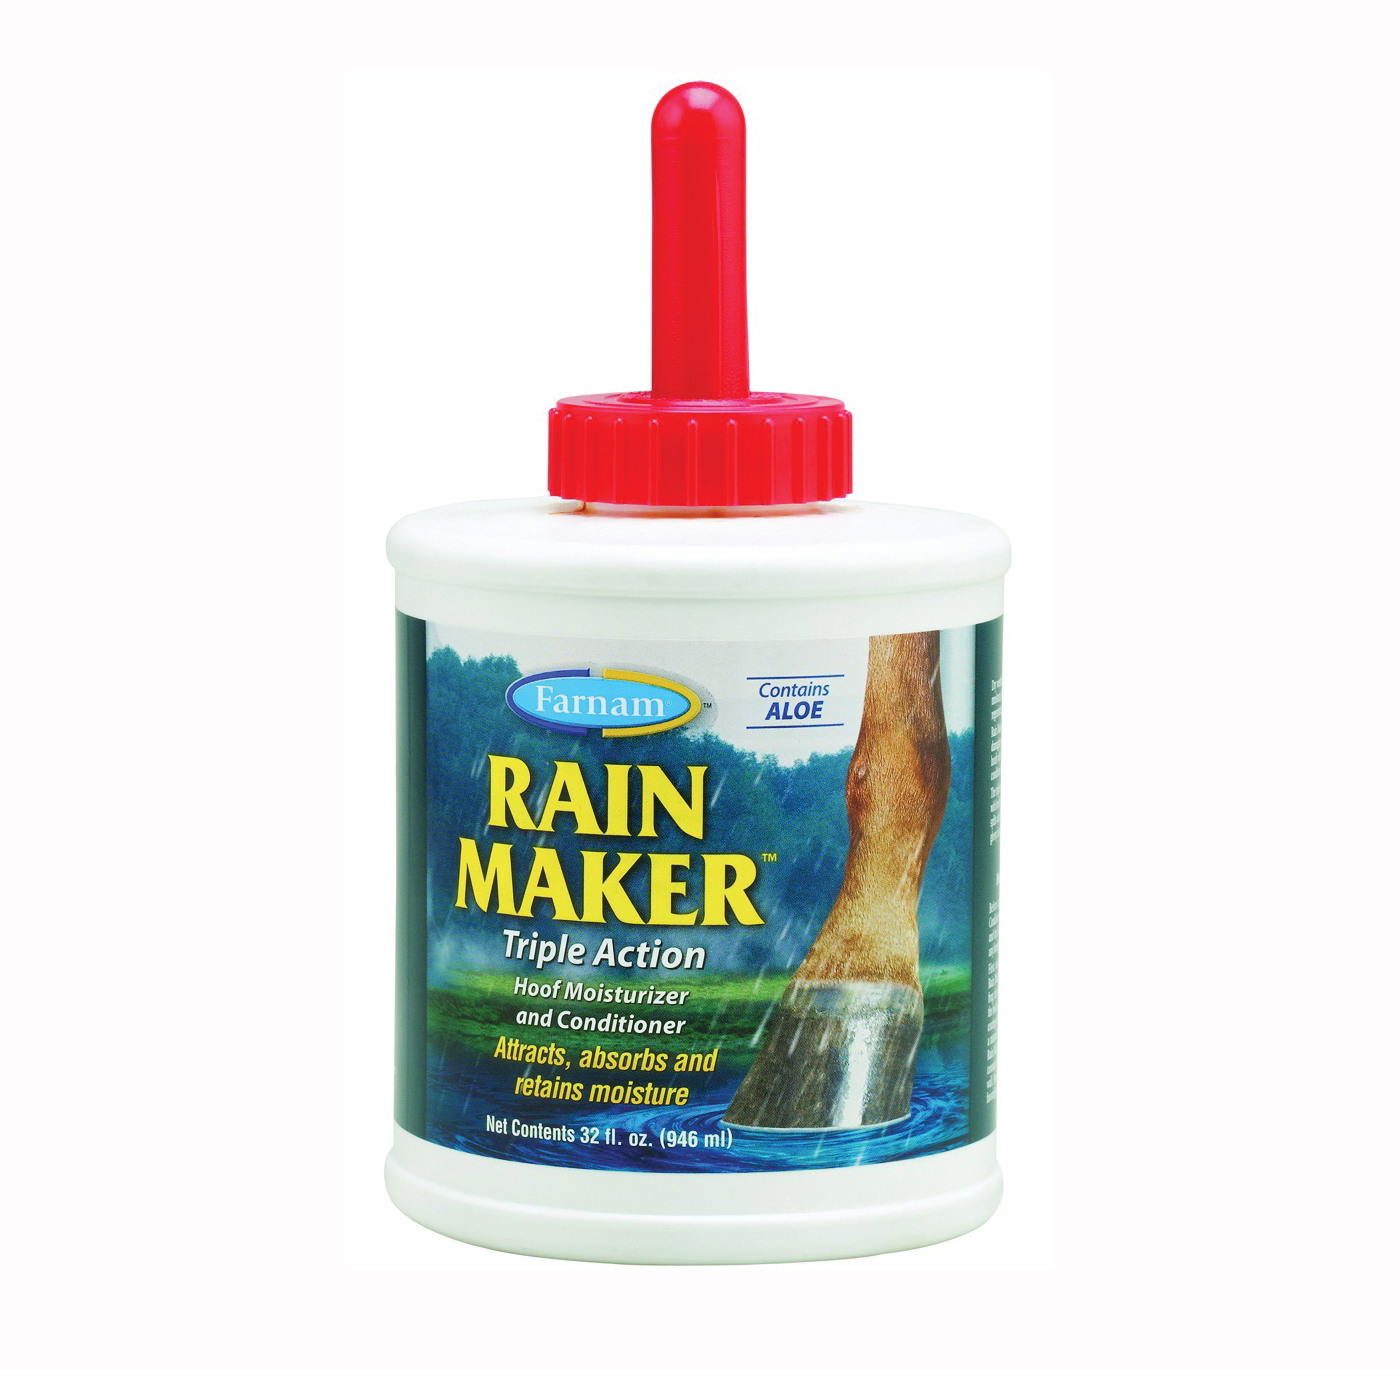 Rain Maker 39701 Hoof Moisturizer and Conditioner, Triple Action, 32 oz